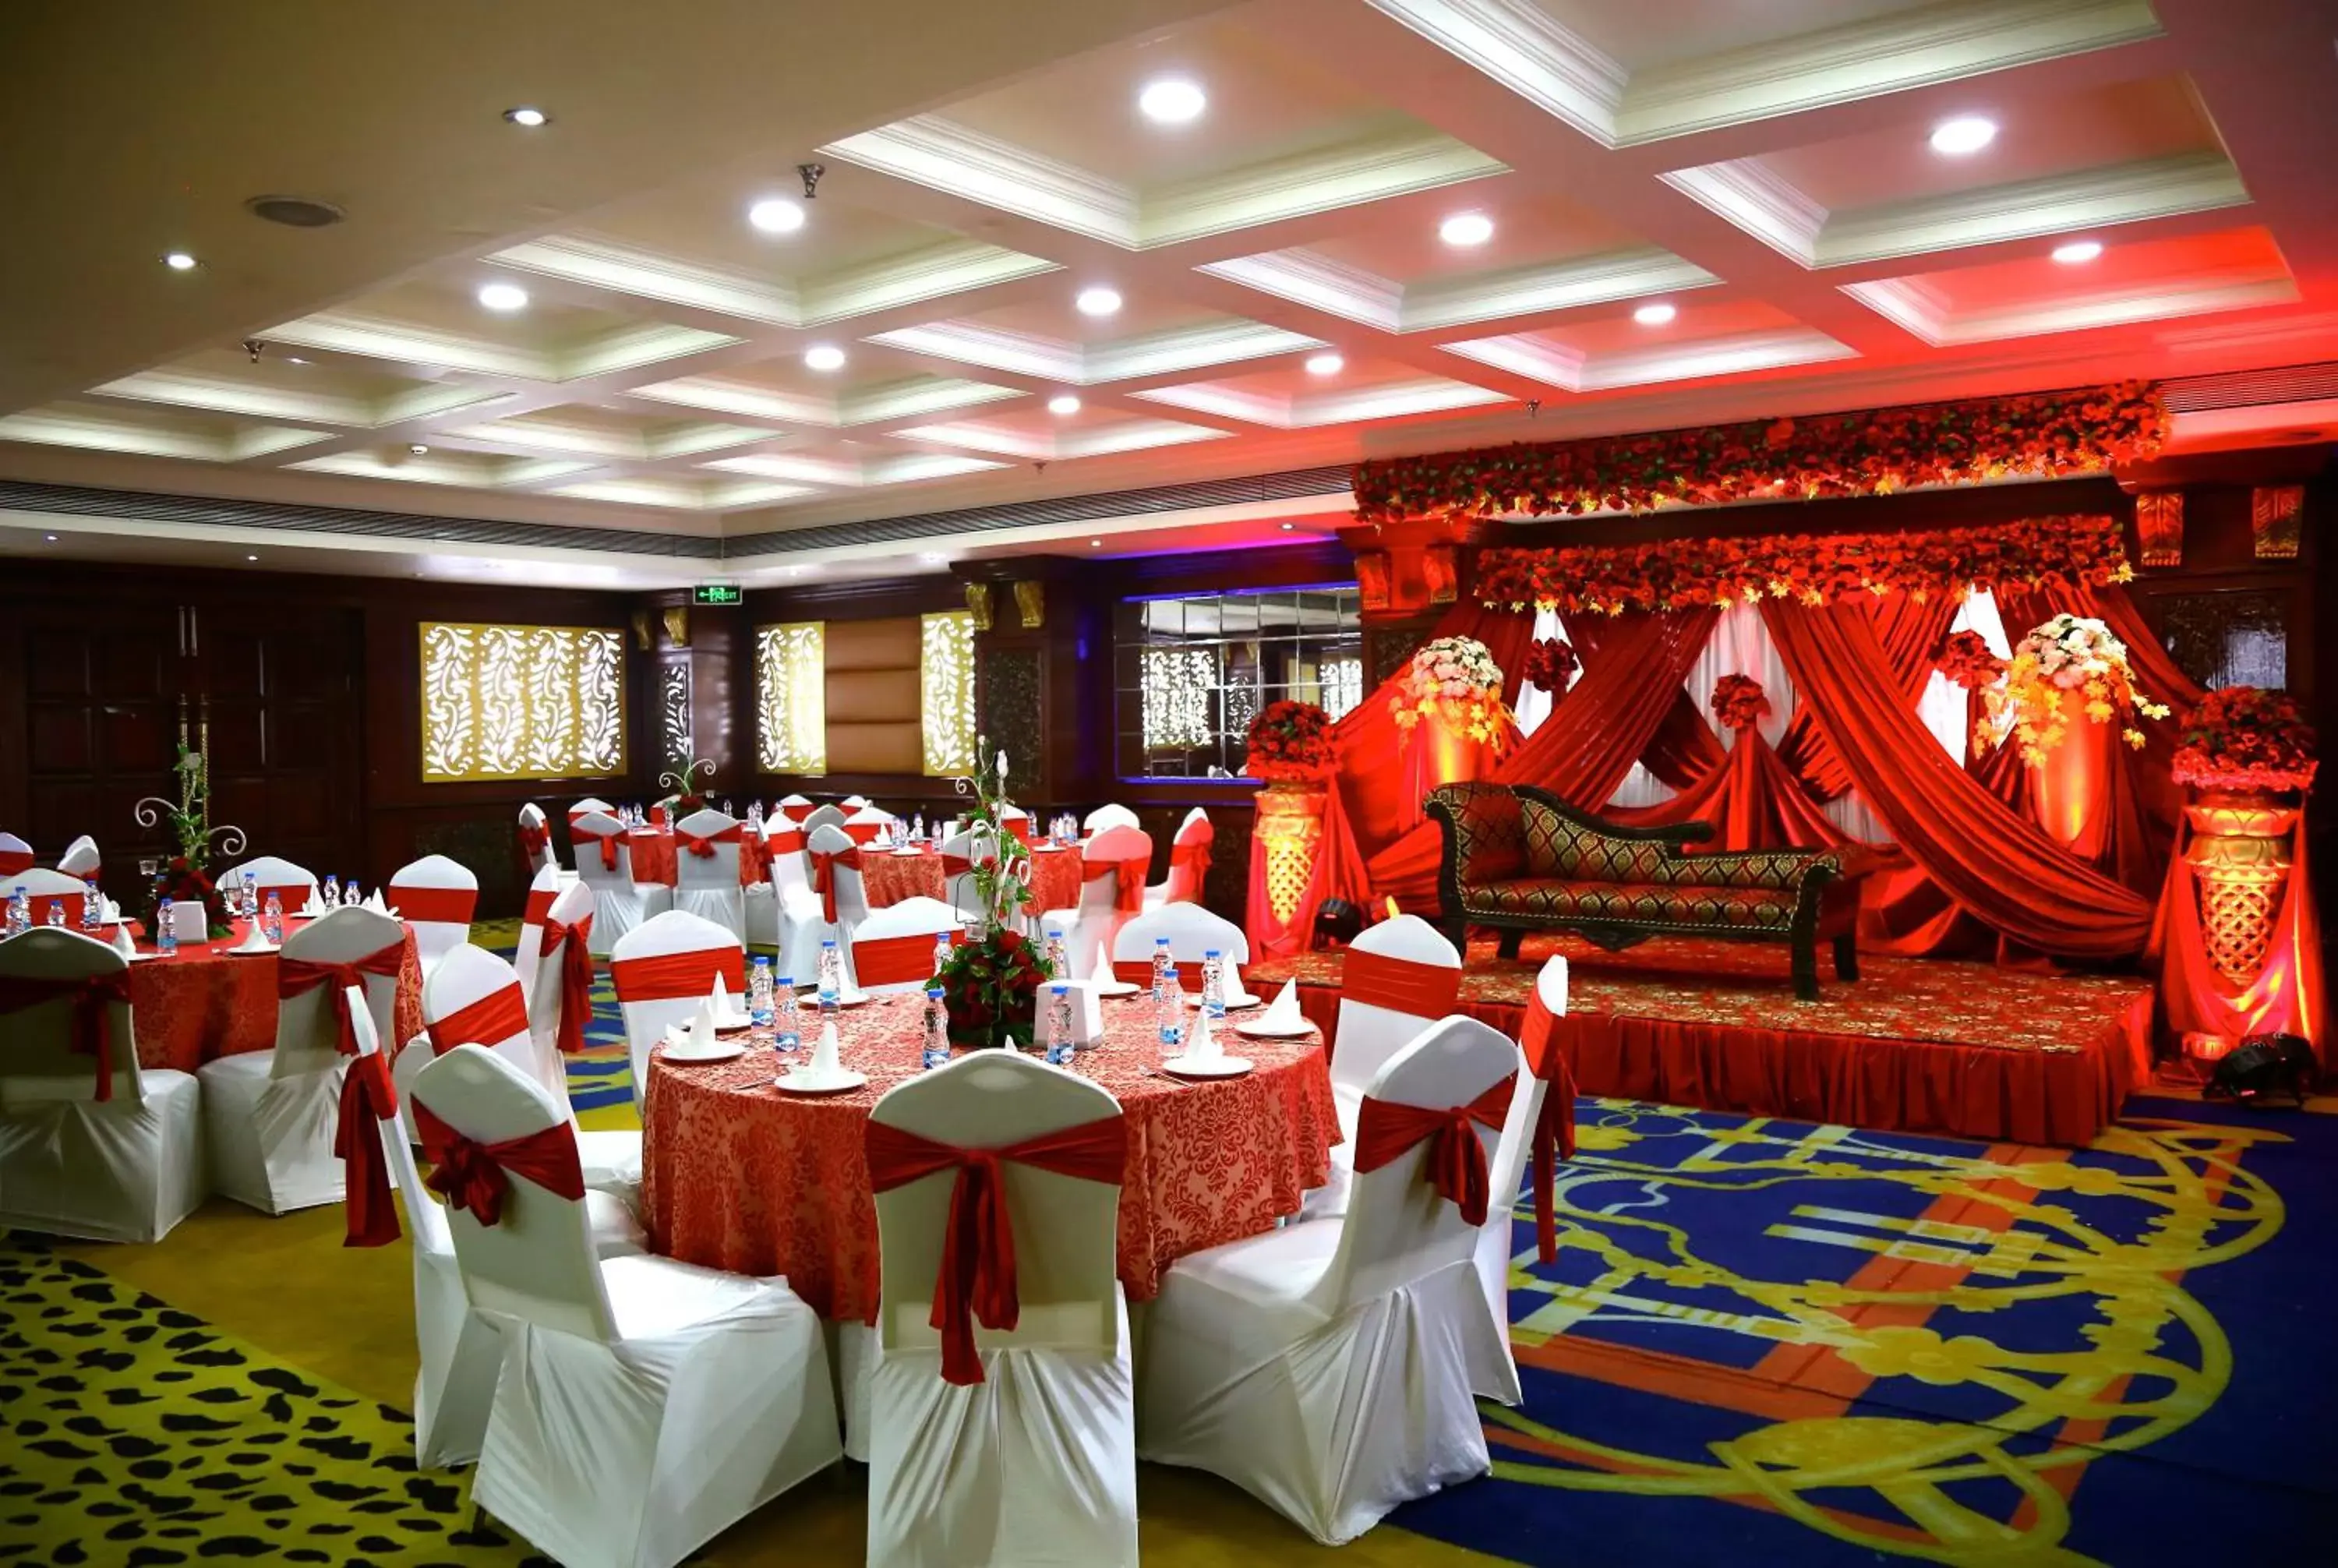 Banquet/Function facilities, Banquet Facilities in Ramada Amritsar